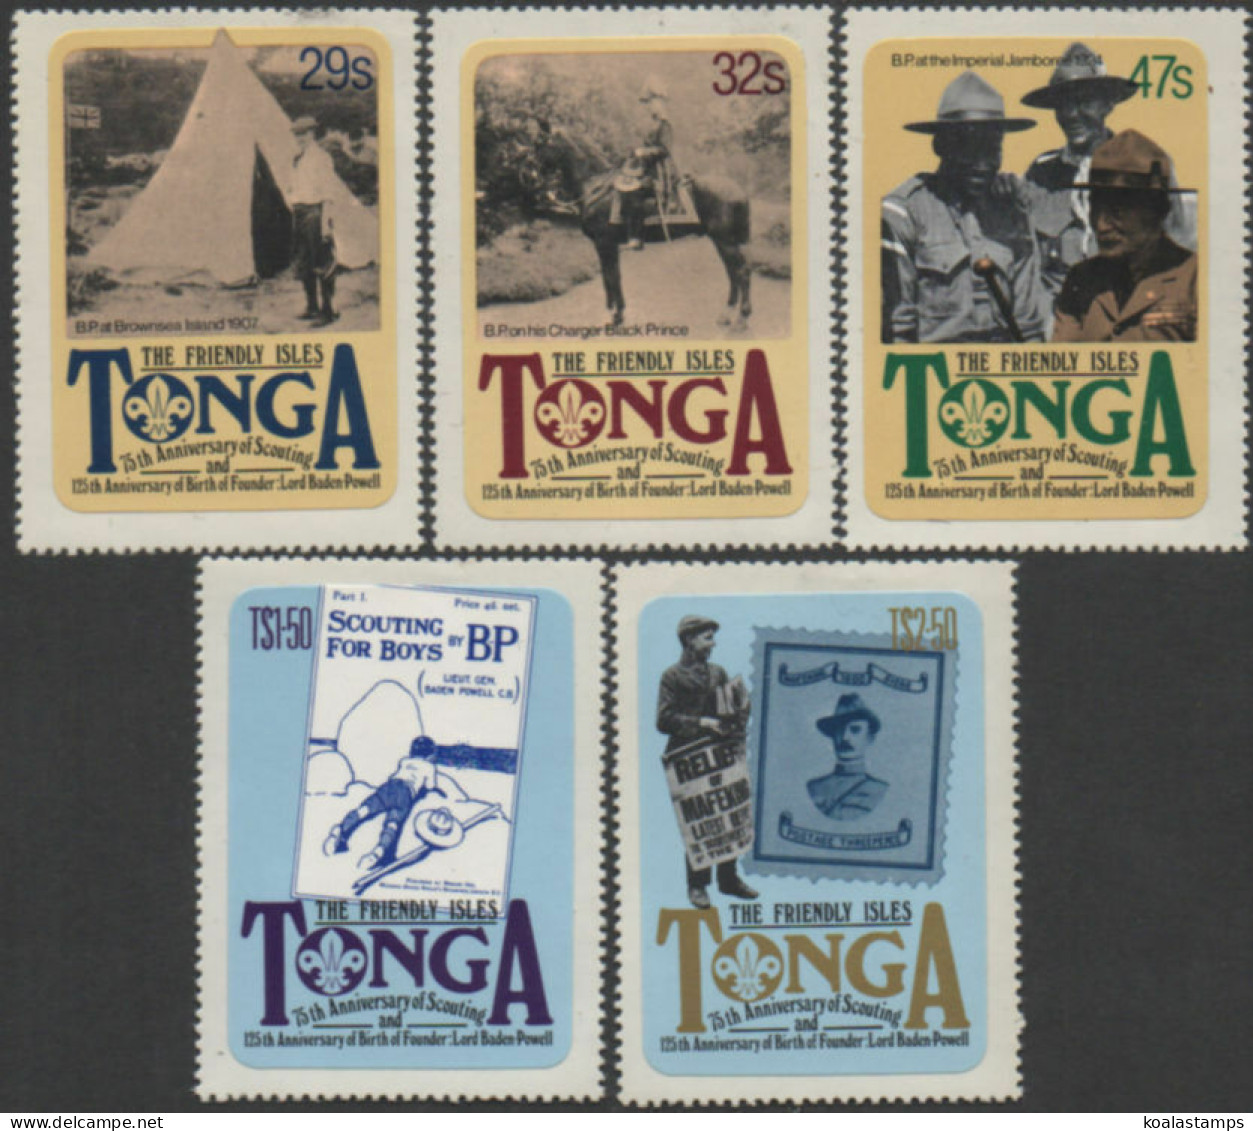 Tonga 1982 SG803-807 Boy Scout Movement And Lord Baden-Powell Set MNH - Tonga (1970-...)